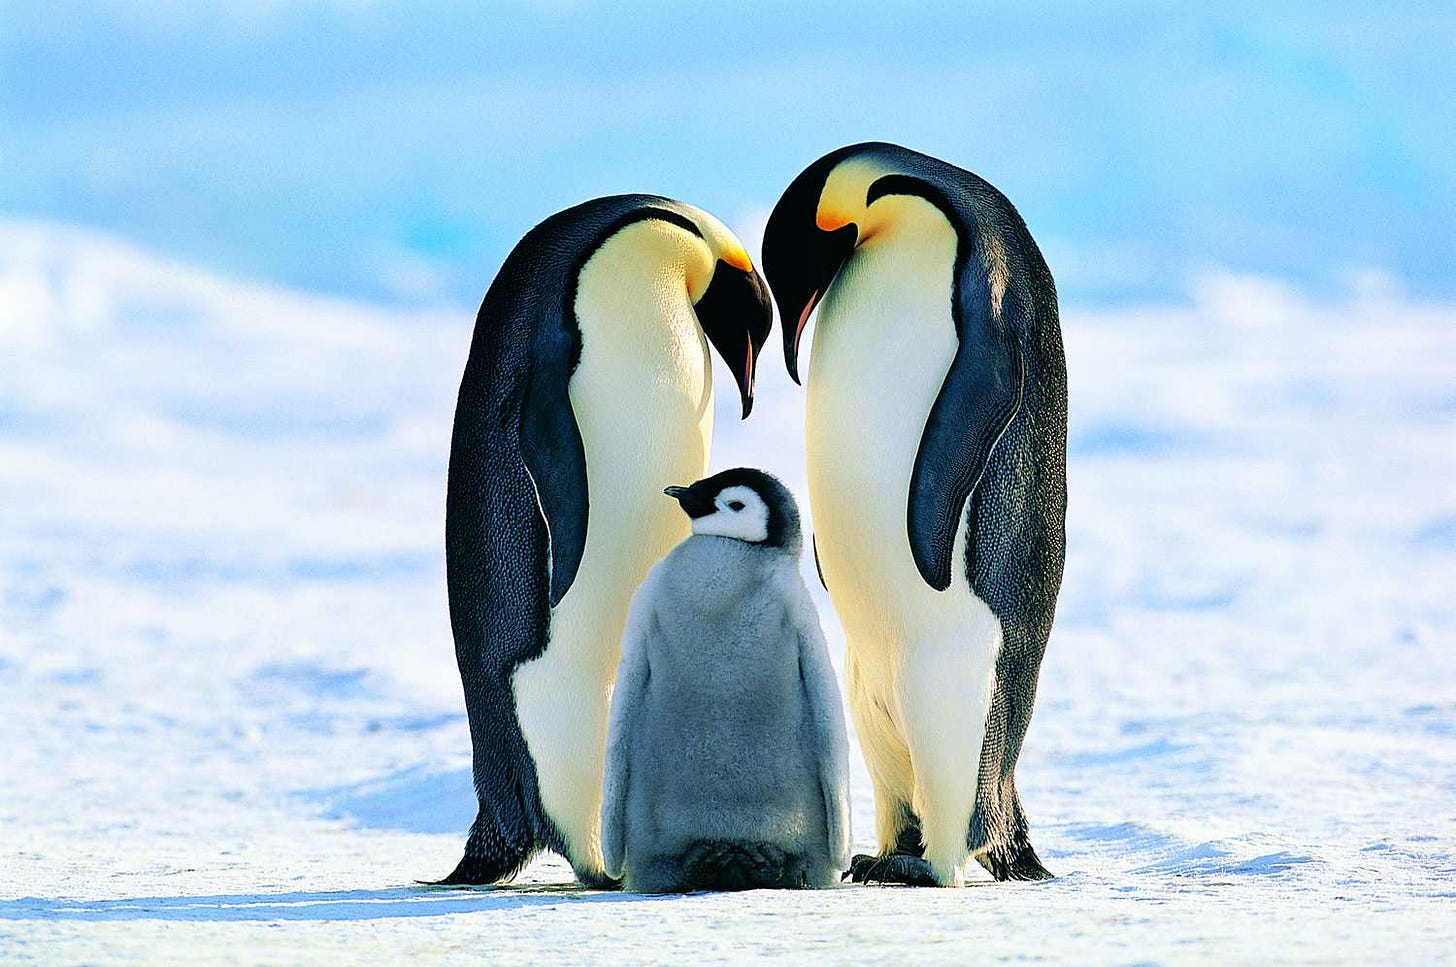 Emperor Penguin Facts (Aptenodytes forsteri)